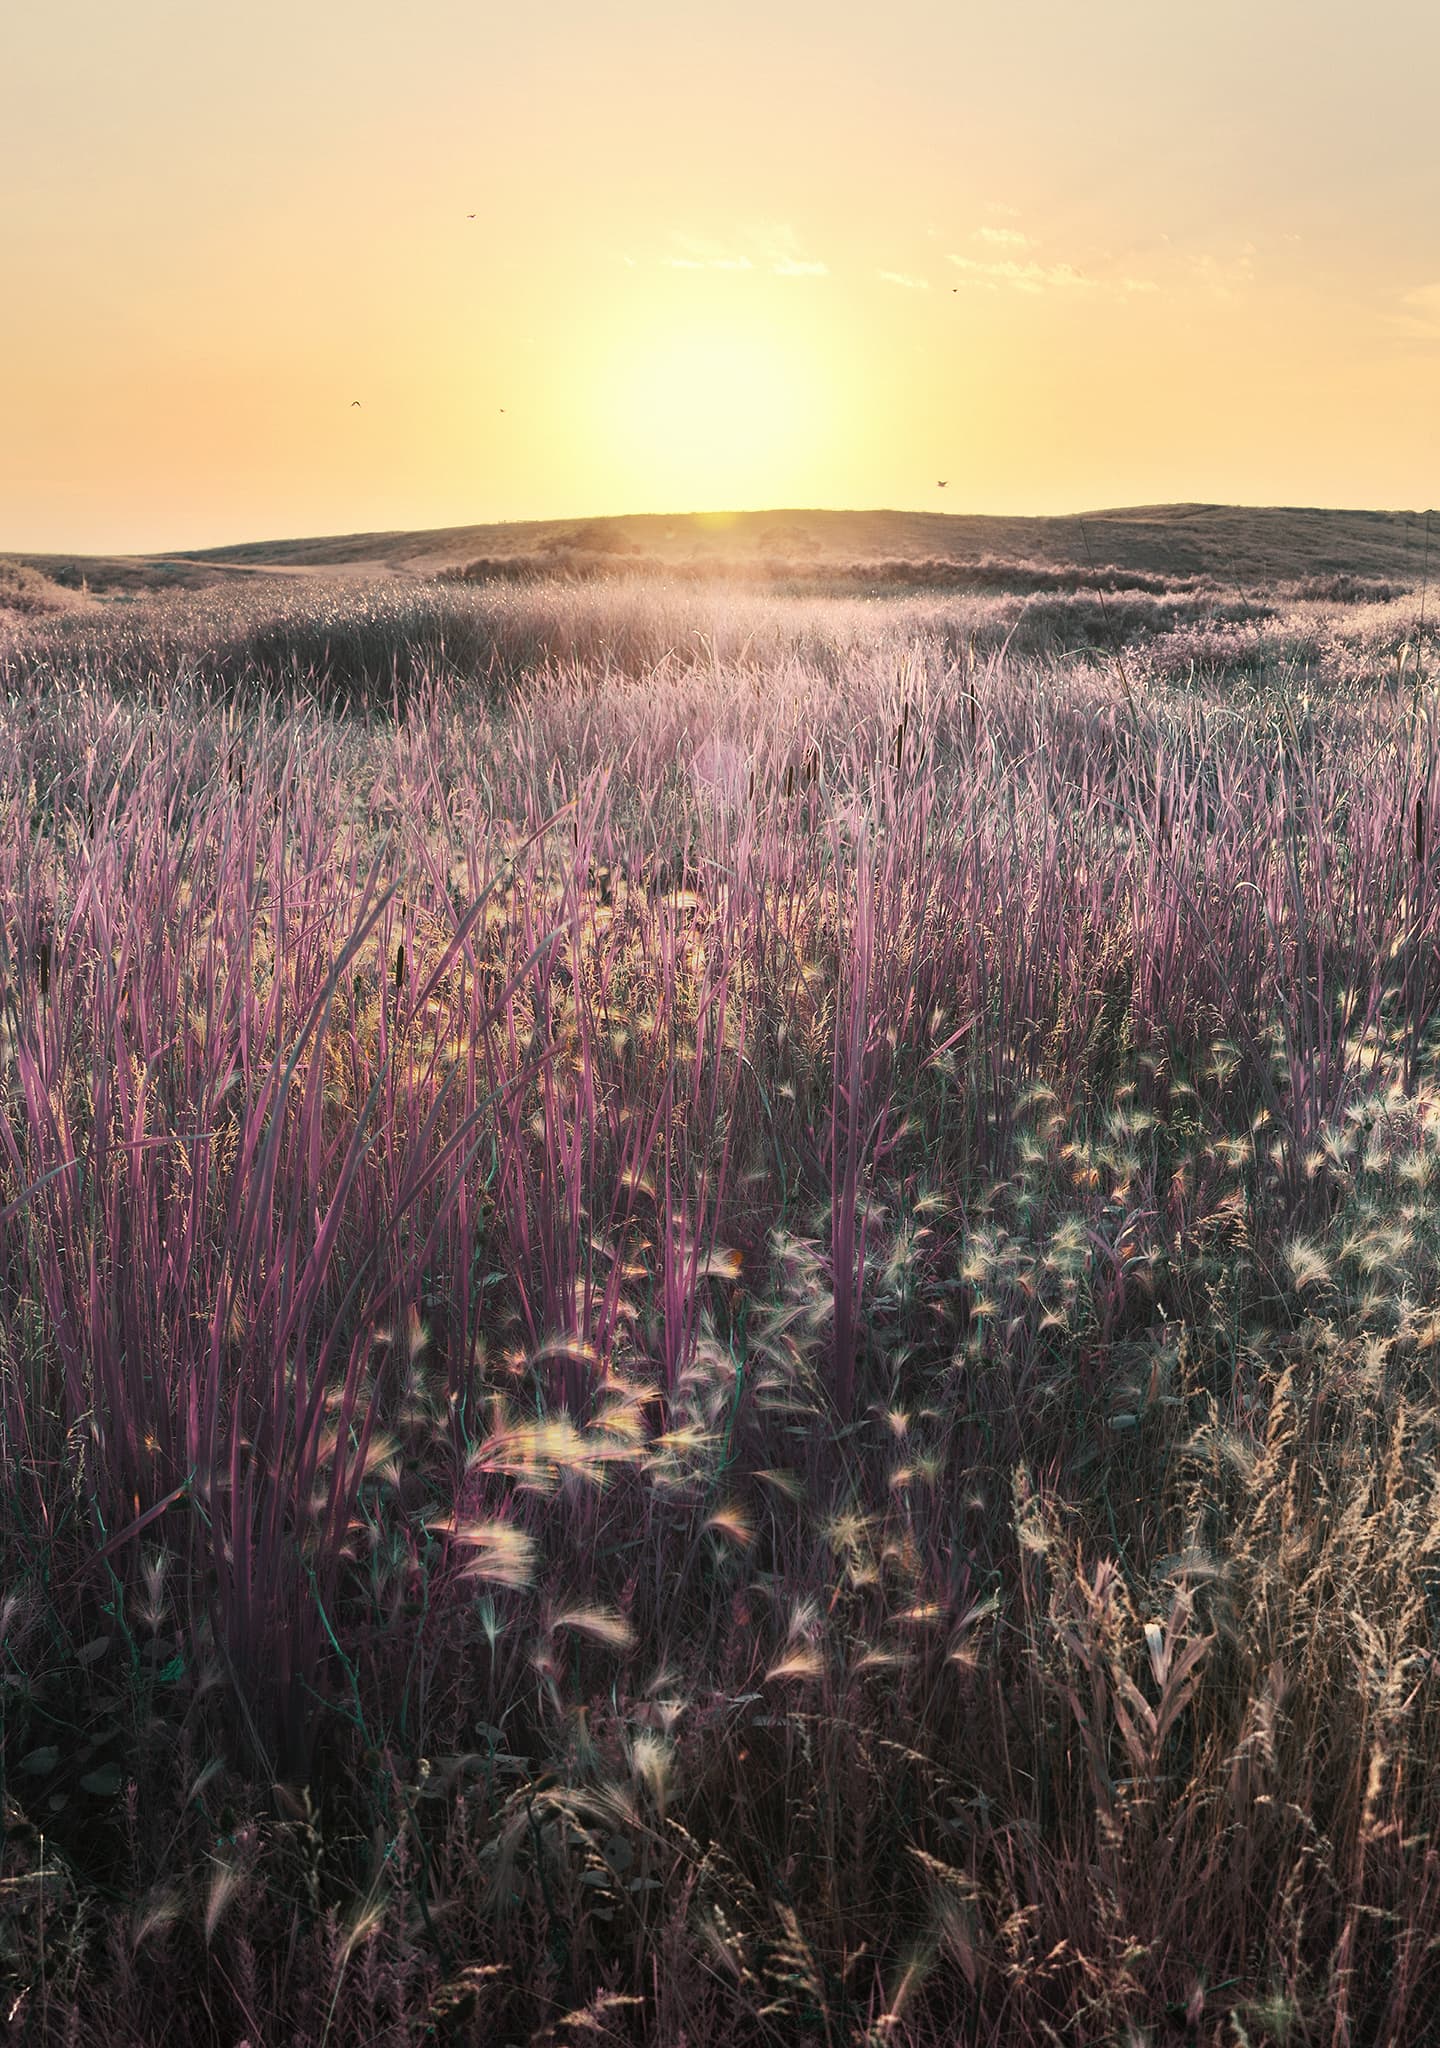 Sunset Field with wild purple grasses